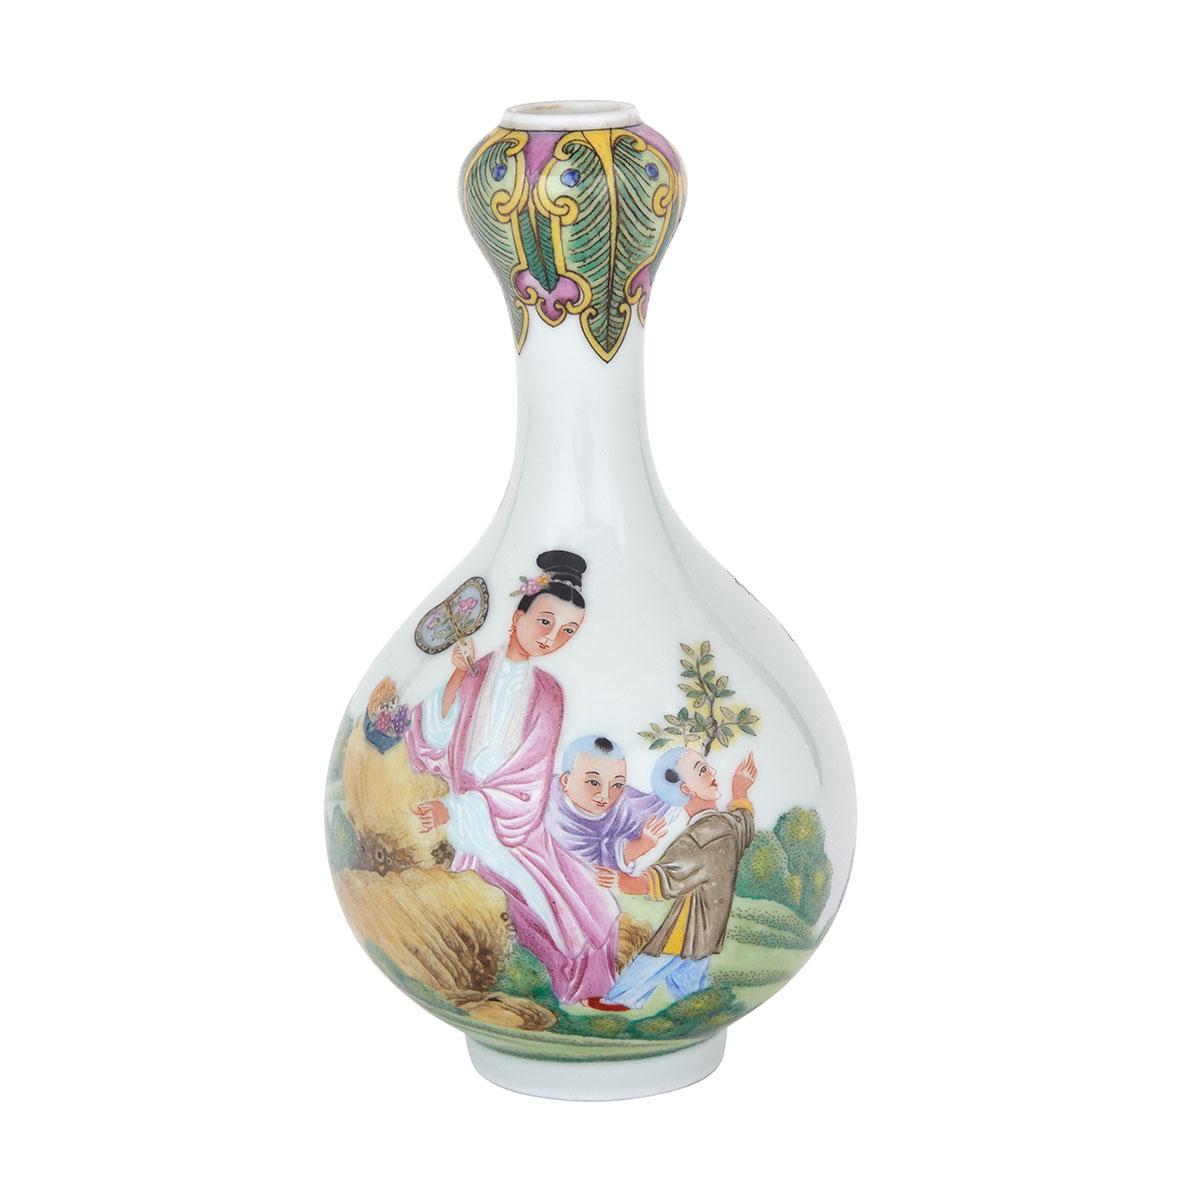 Famille Rose Garlic Mouth Vase, Qianlong Mark, Republican Period